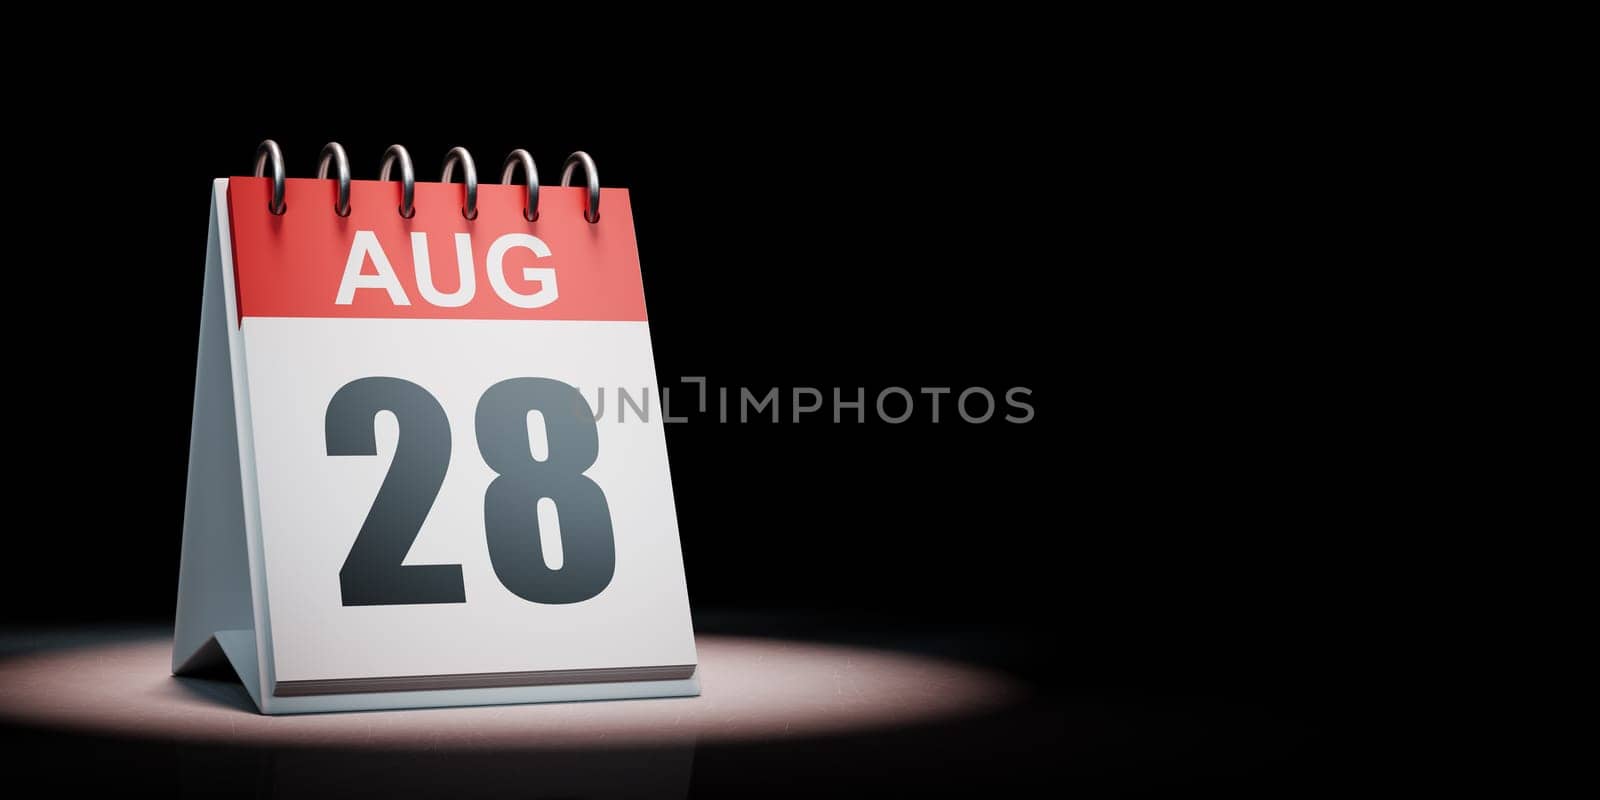 August 28 Calendar Spotlighted on Black Background by make